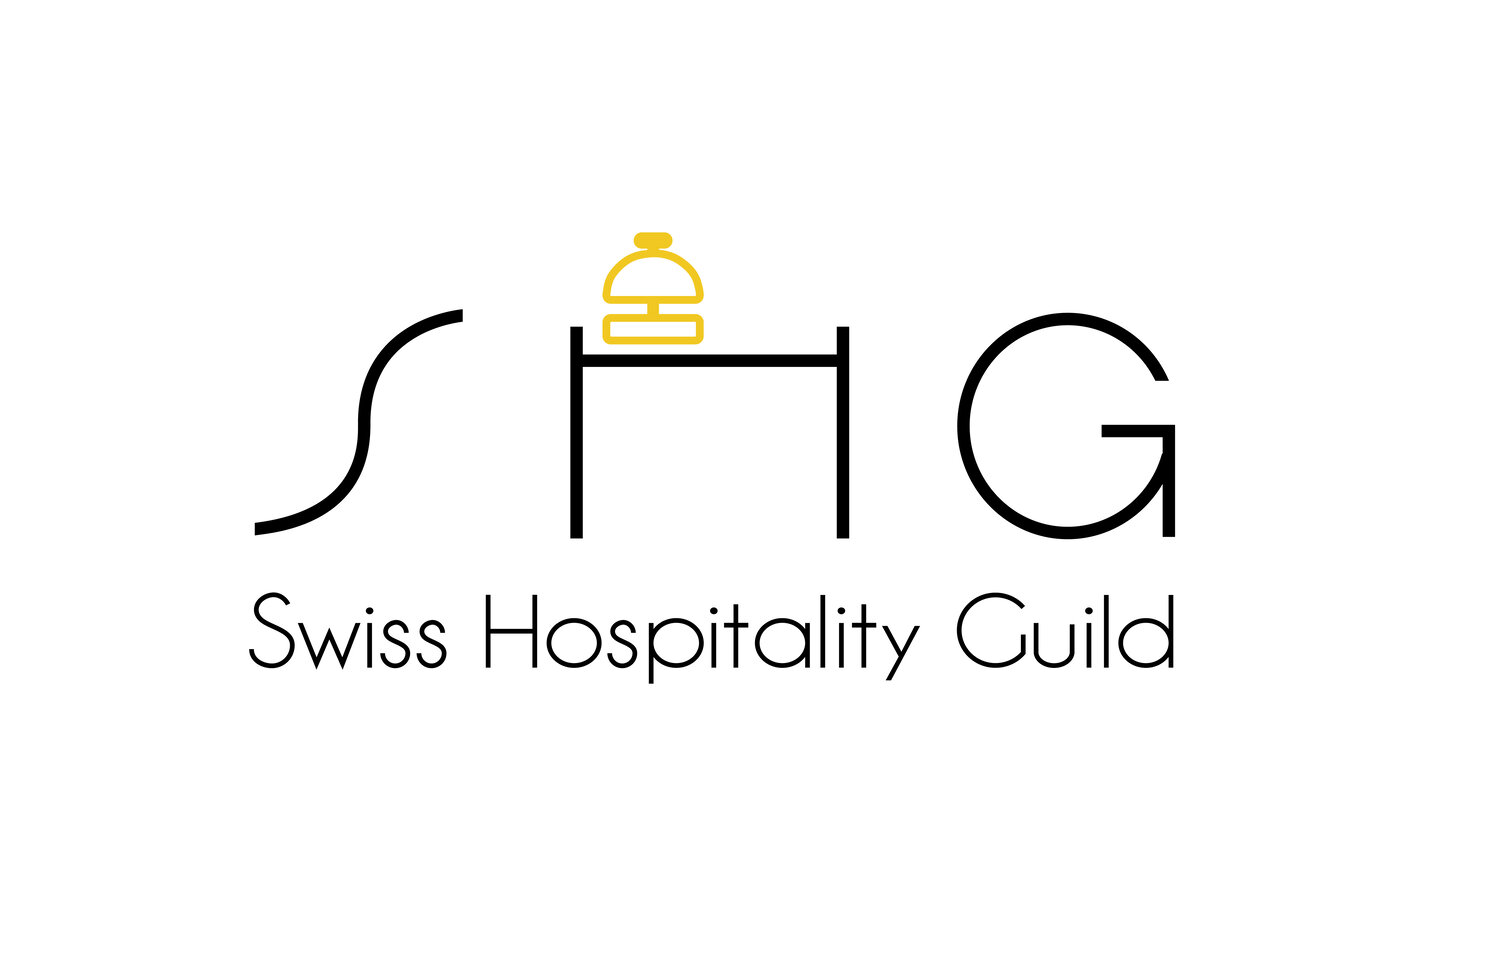 Swiss Hospitality Guild